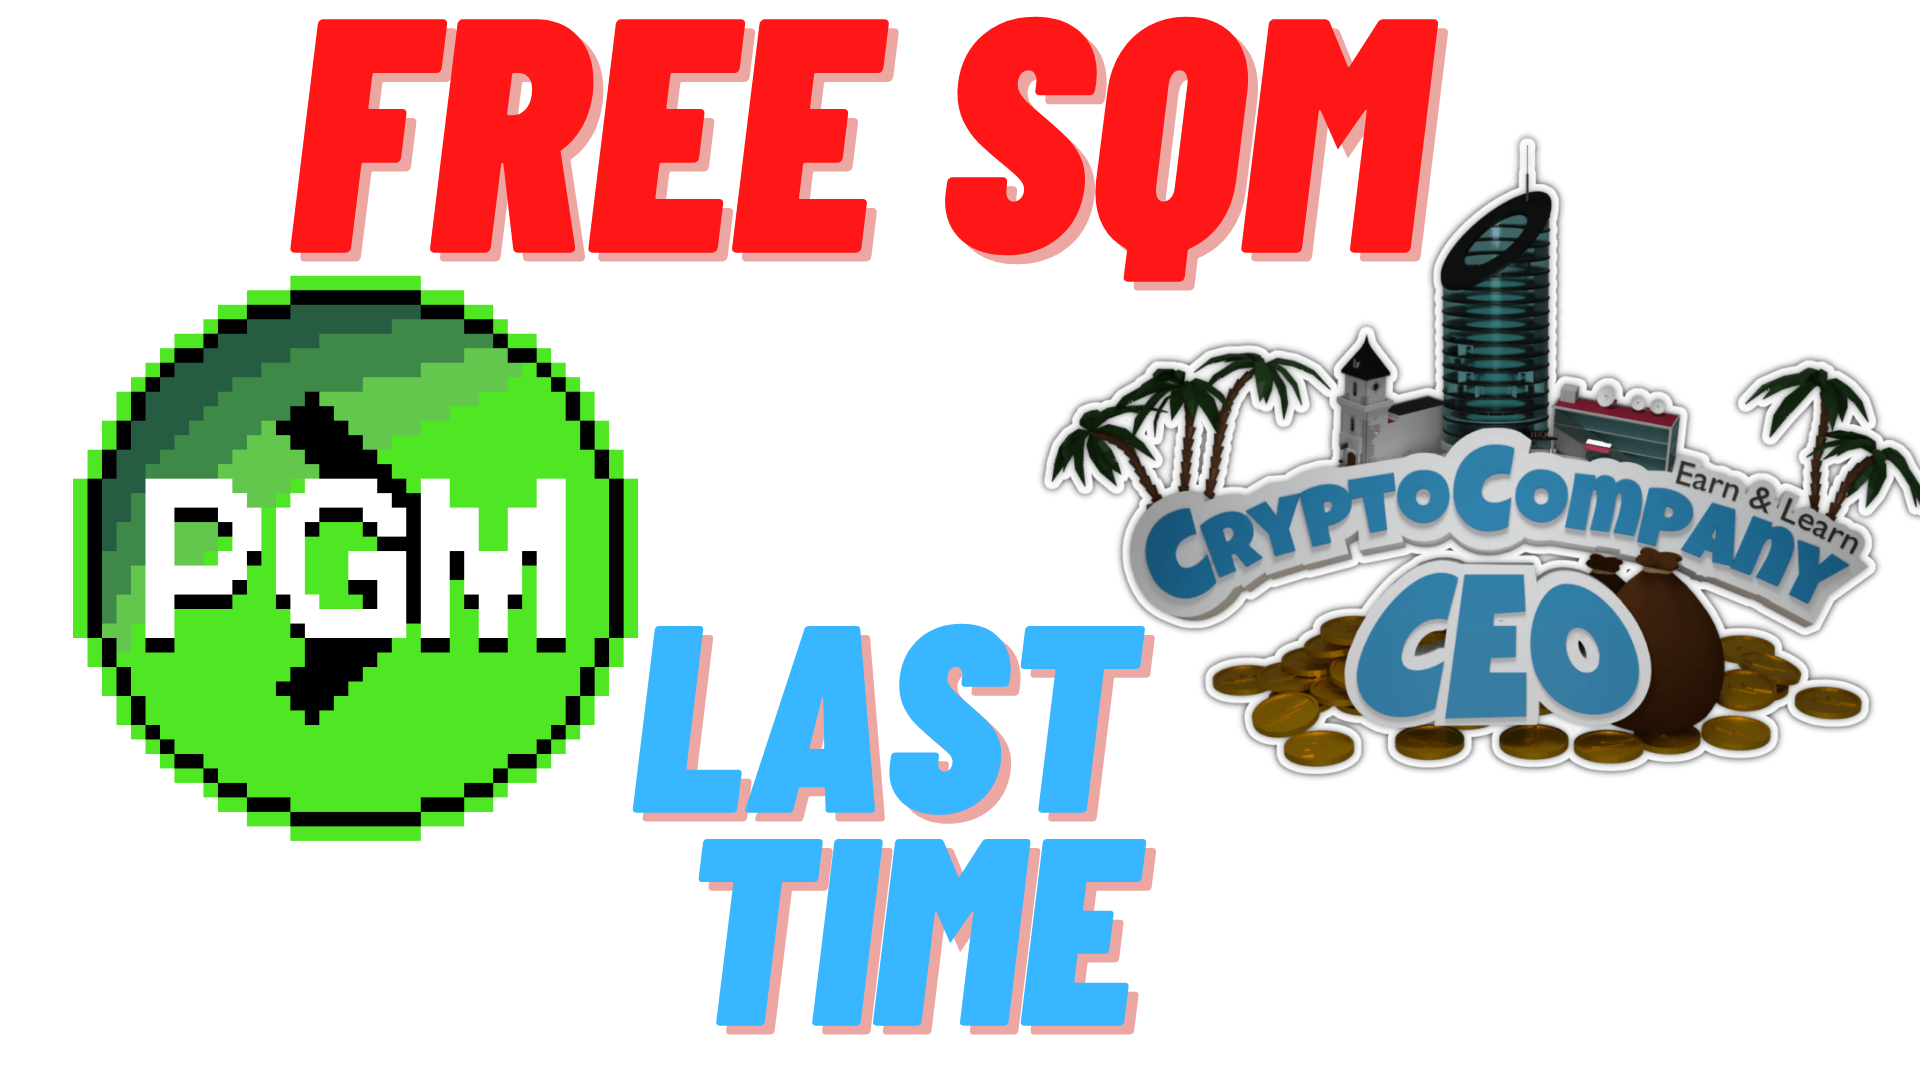 @zottone444/pgm-x-cryptocompany-last-chance-to-get-free-sqm-ita-egn